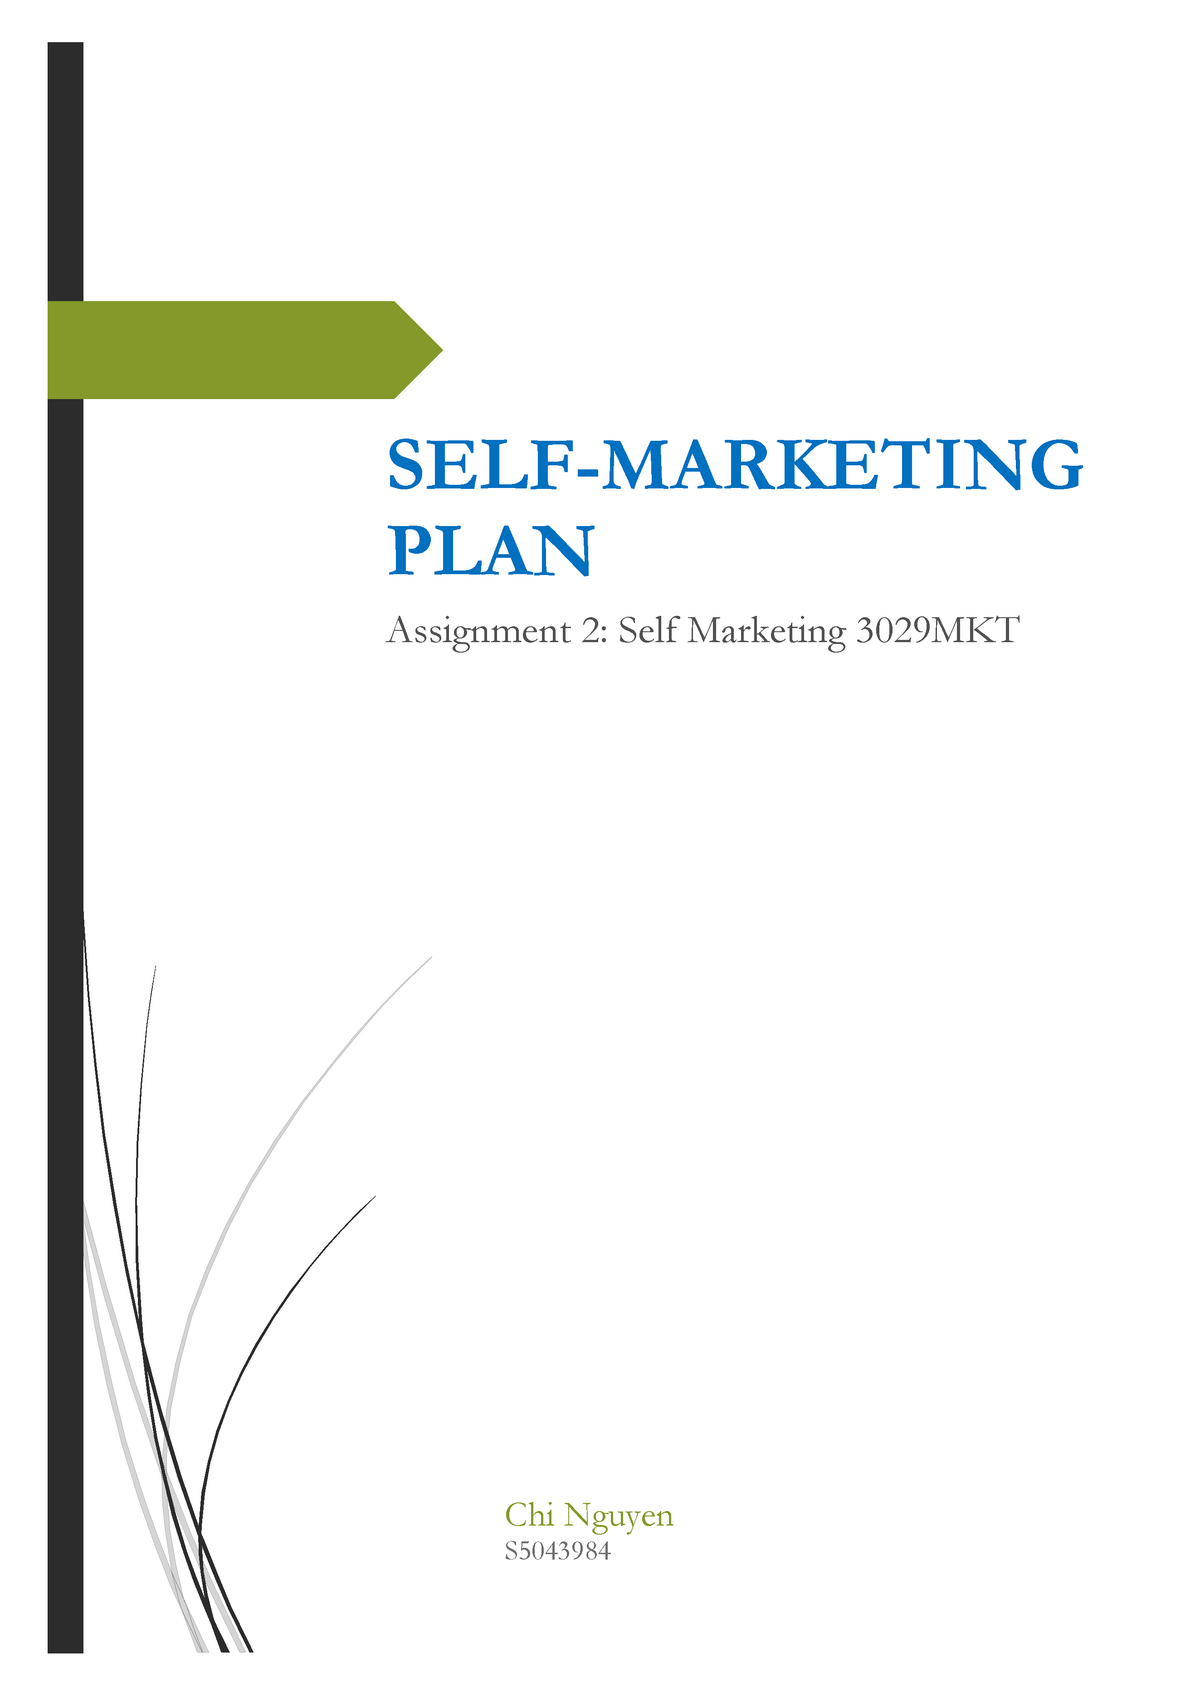 Self-marketing plan s504398 Nguyen - SELF-MARKETING PLAN Assignment 2 ...